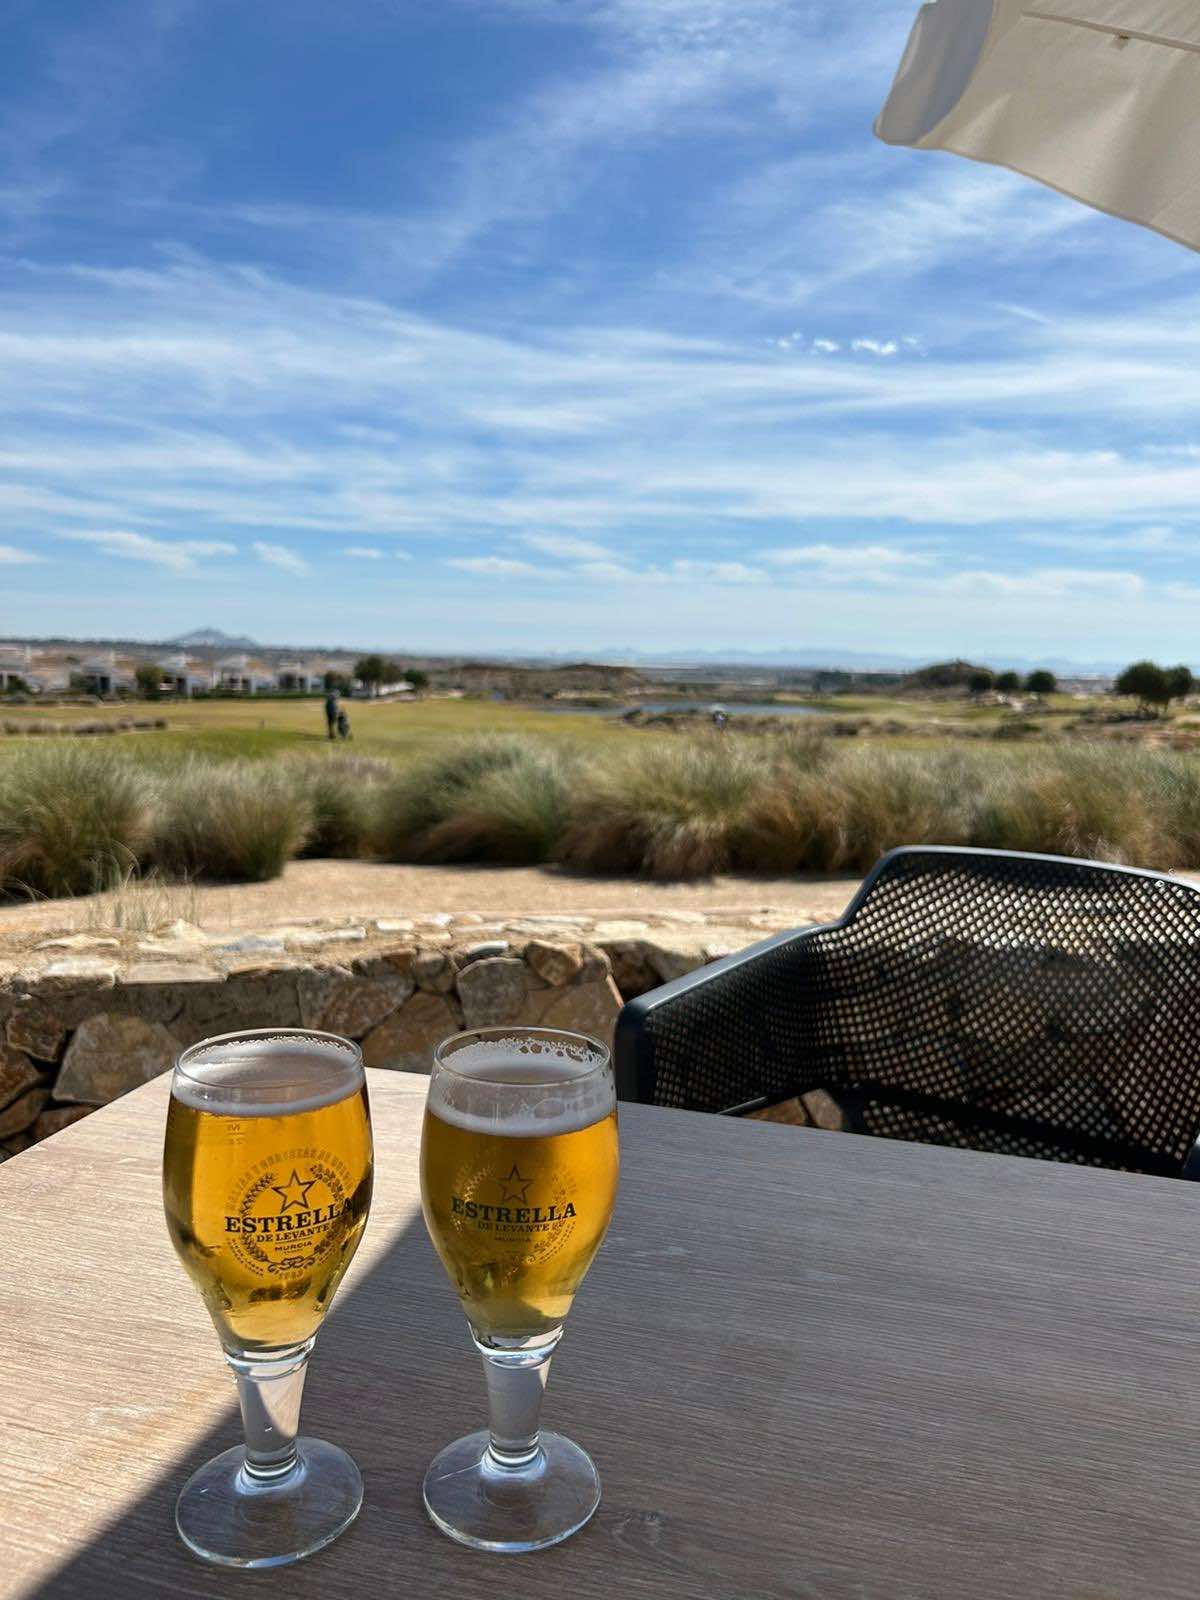 Enjoying two beers on the patio overlooking El Valle Golf in Spain